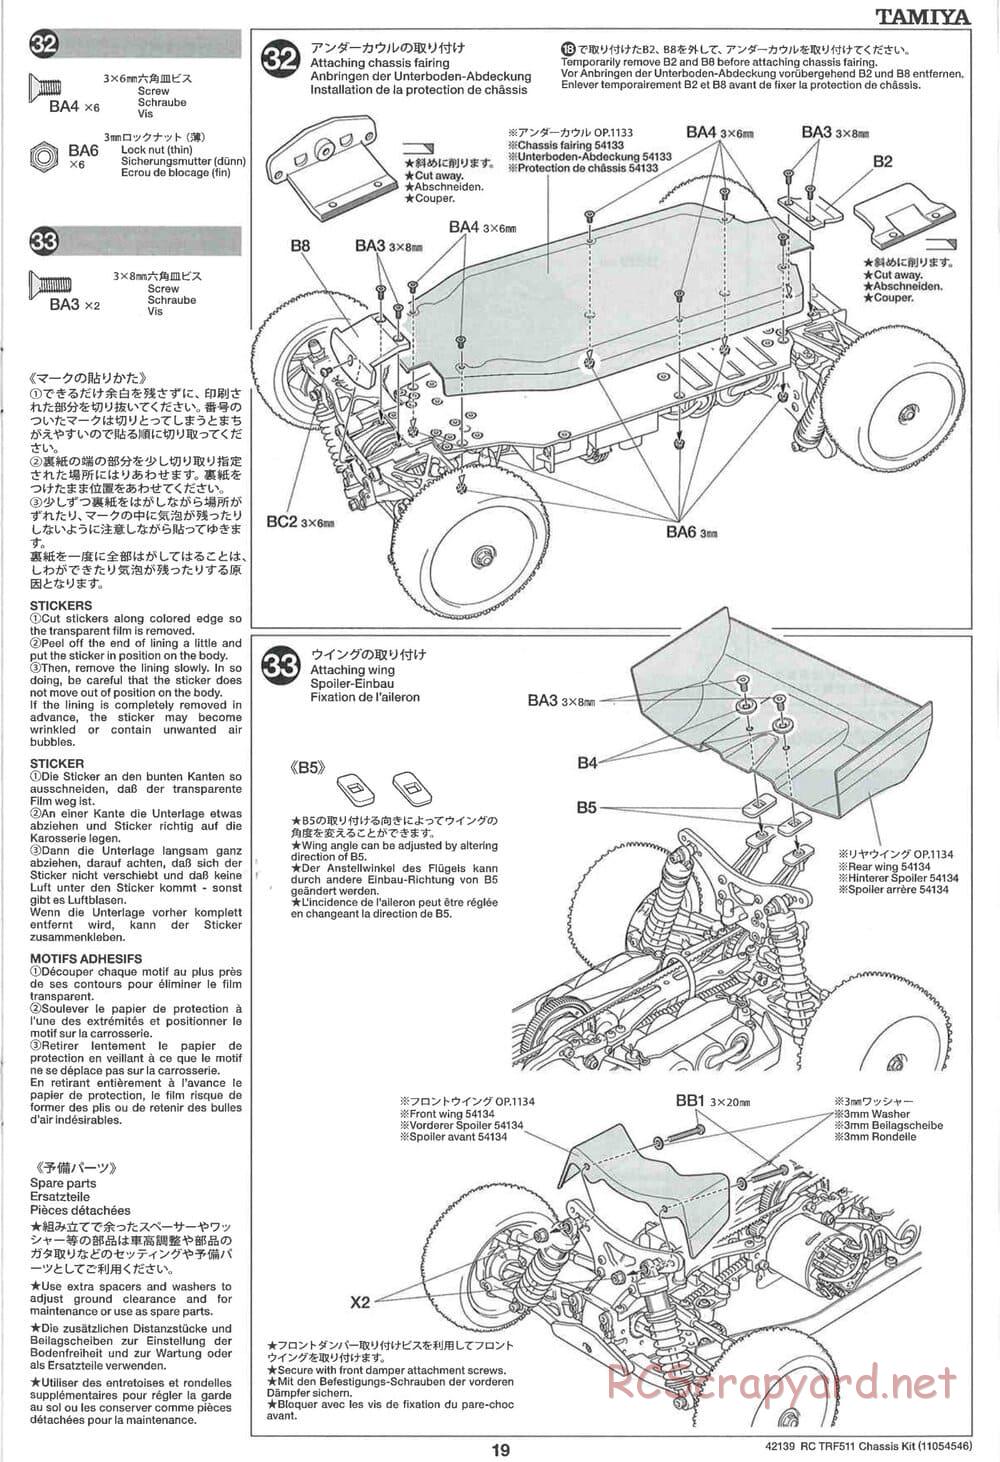 Tamiya - TRF511 Chassis - Manual - Page 19